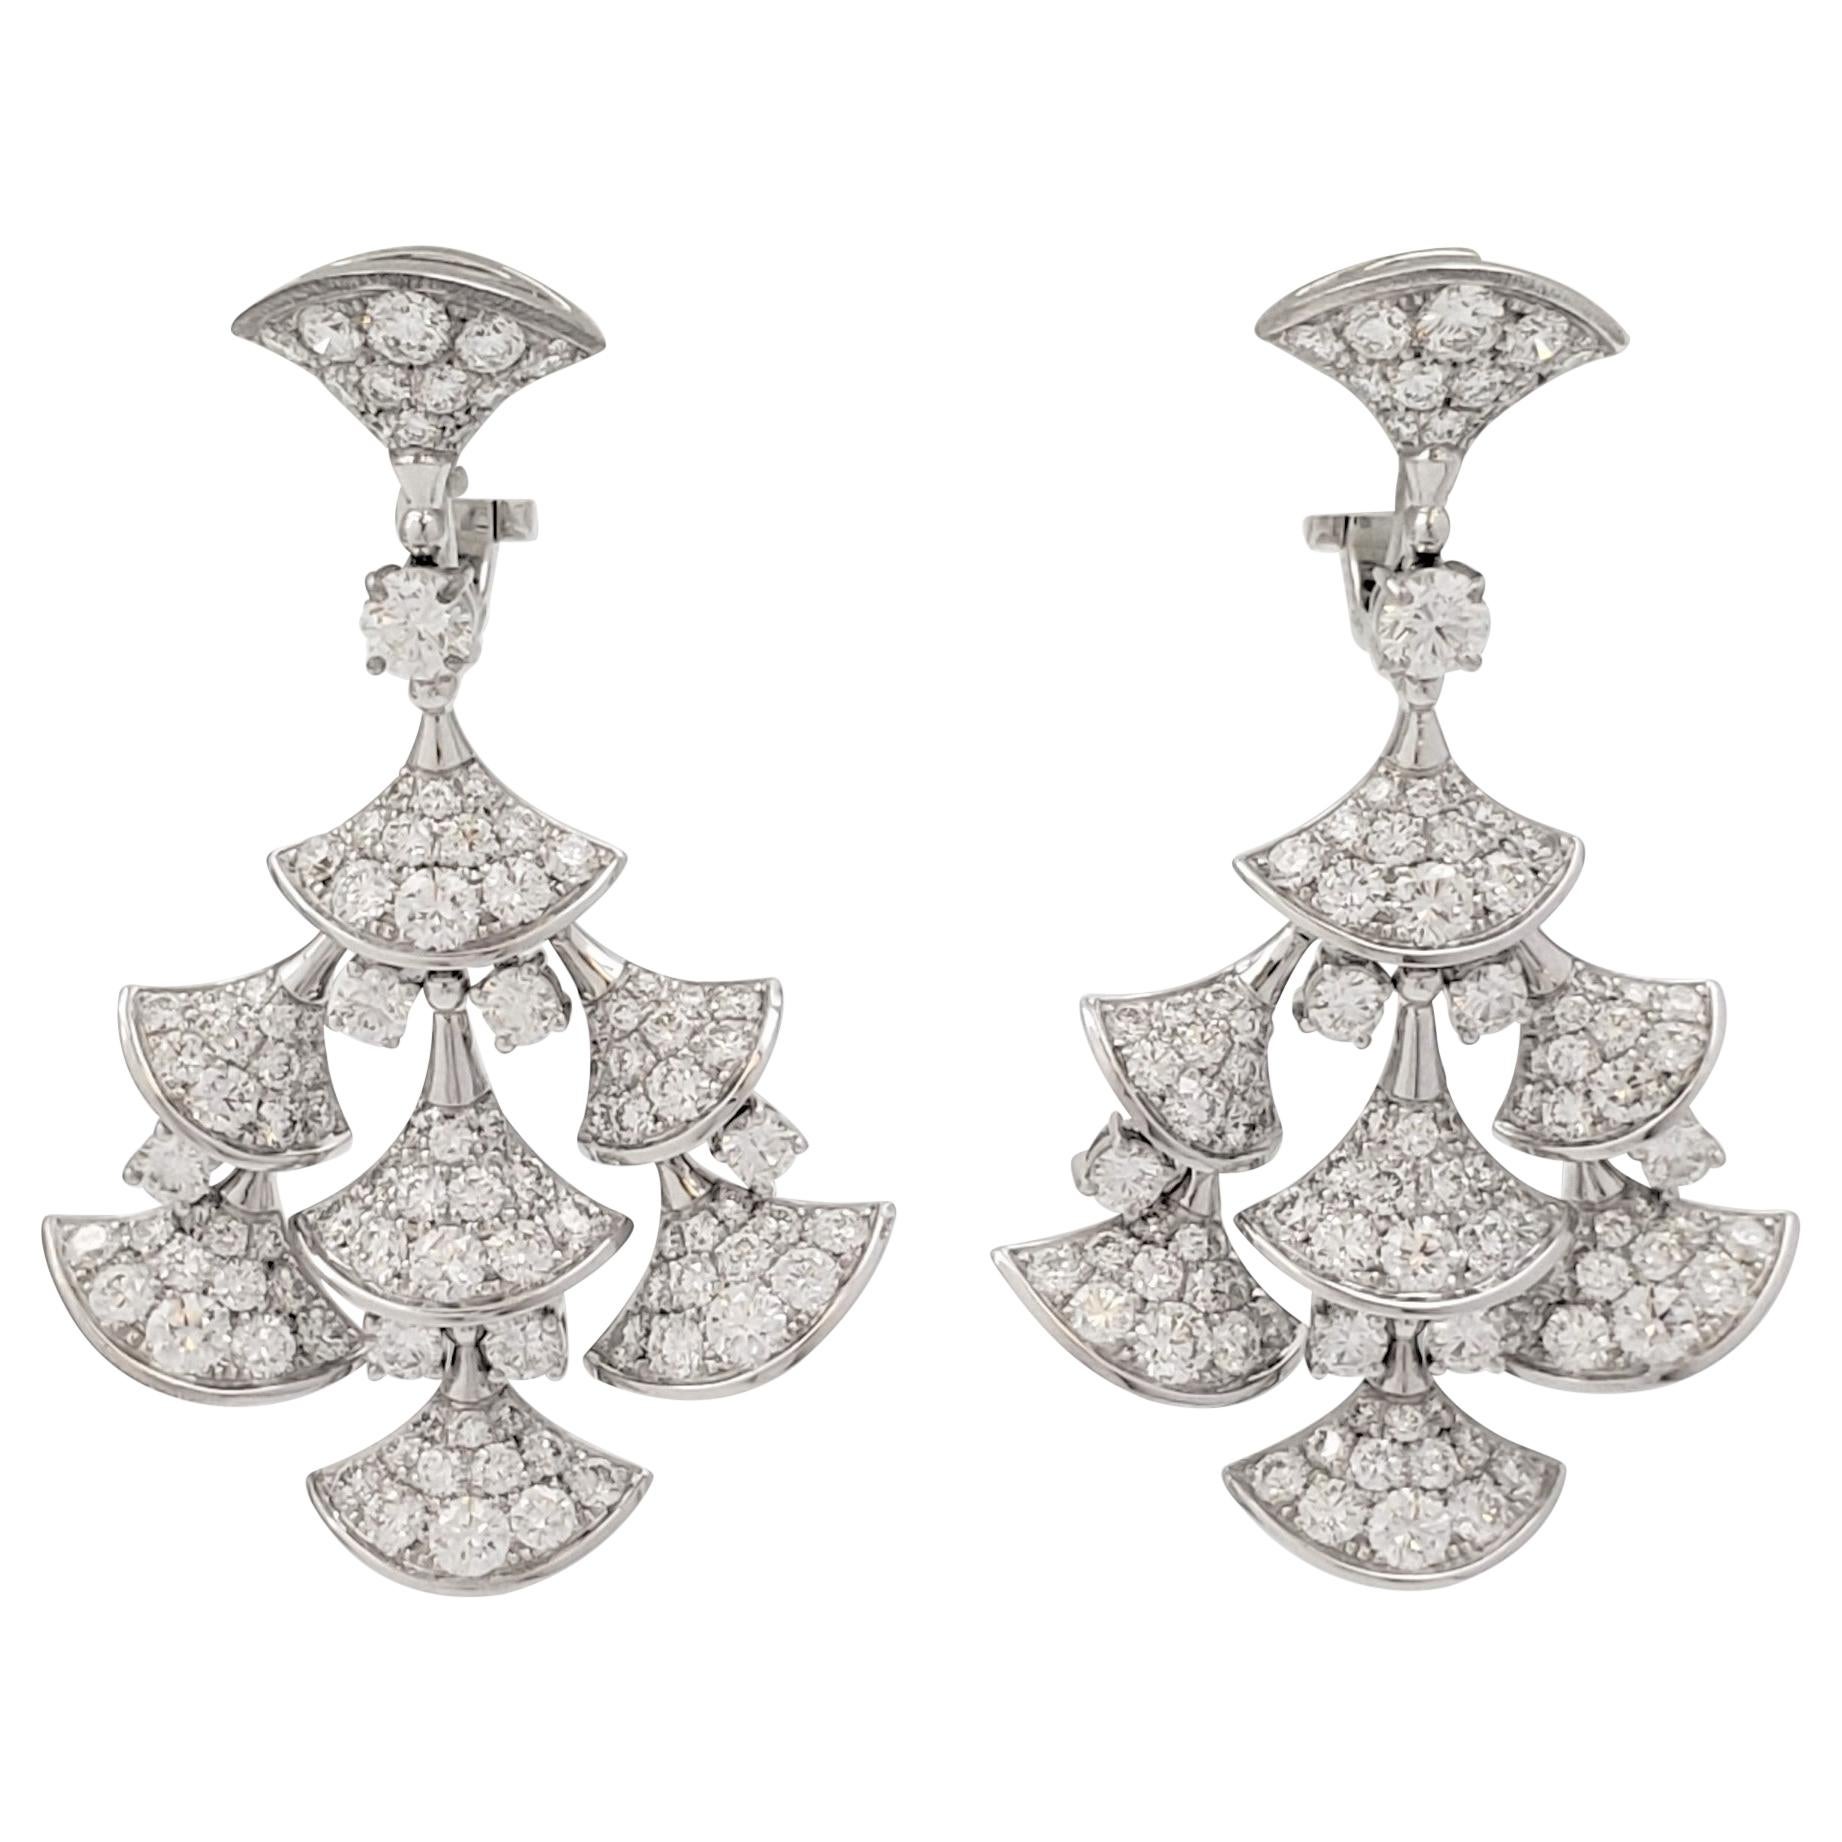 Bvlgari 'Divas' Dream' White Gold and Diamond Earrings